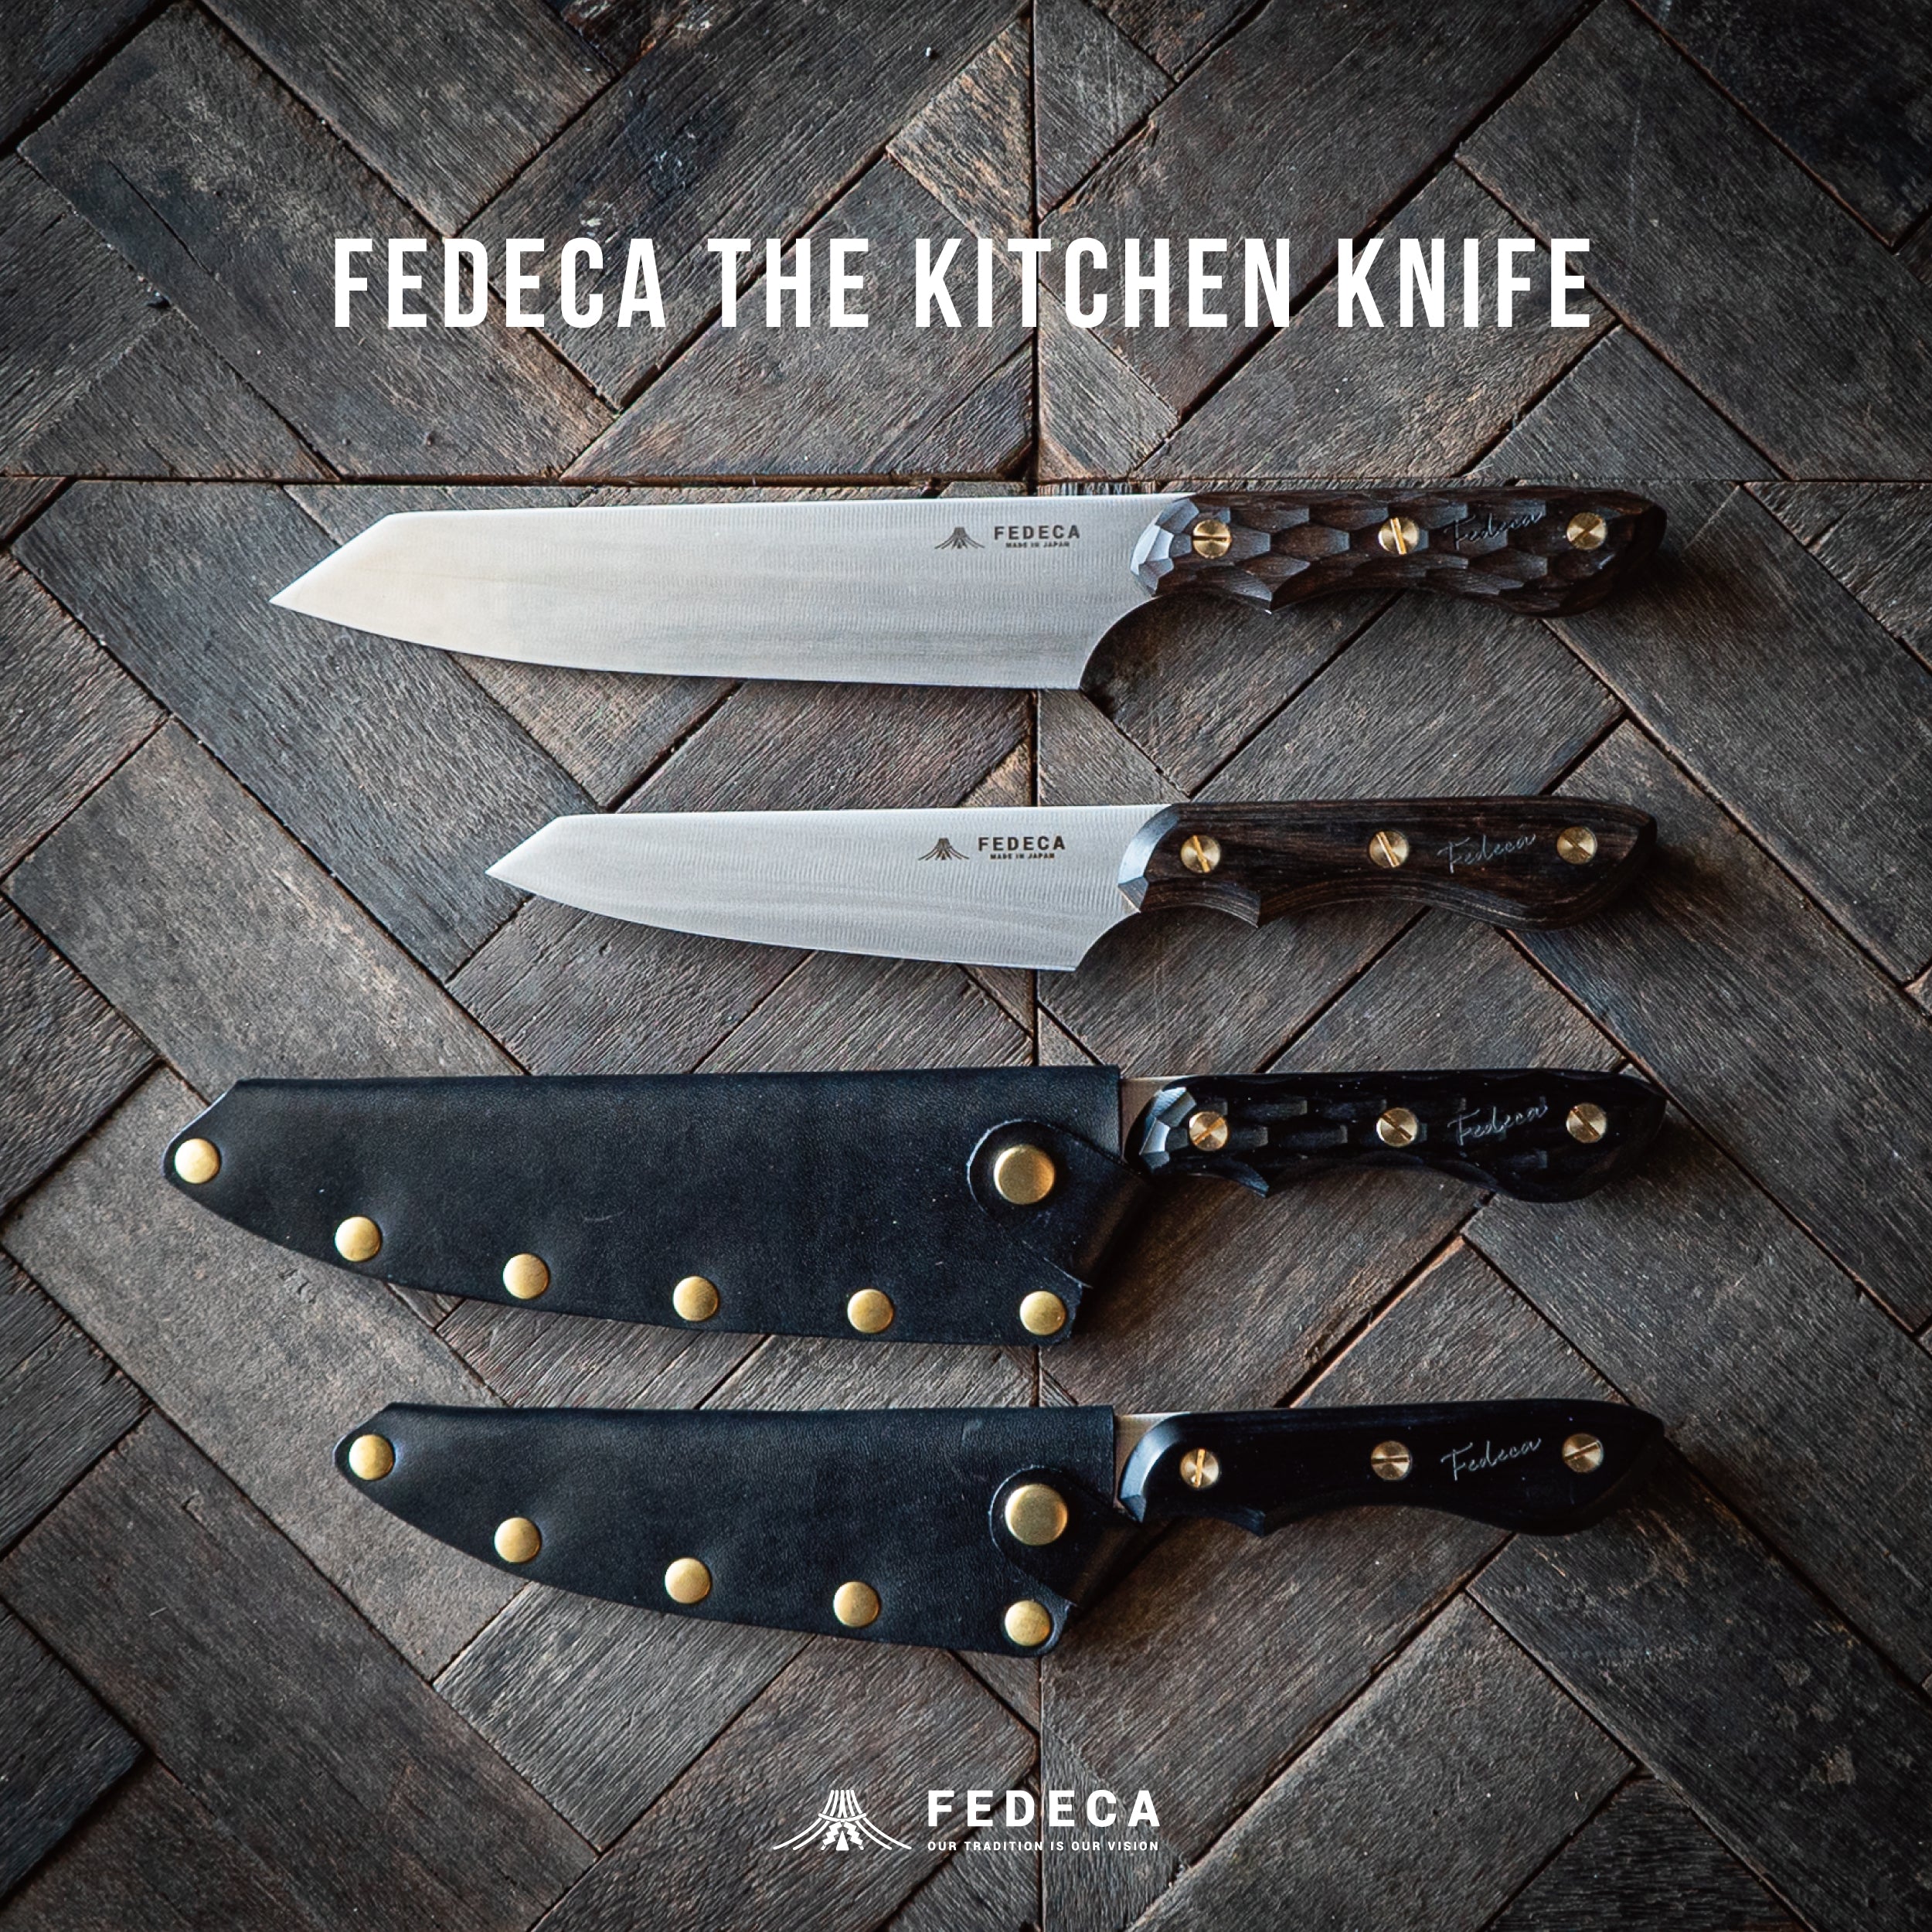 FEDECA THE KITCHEN KNIFE